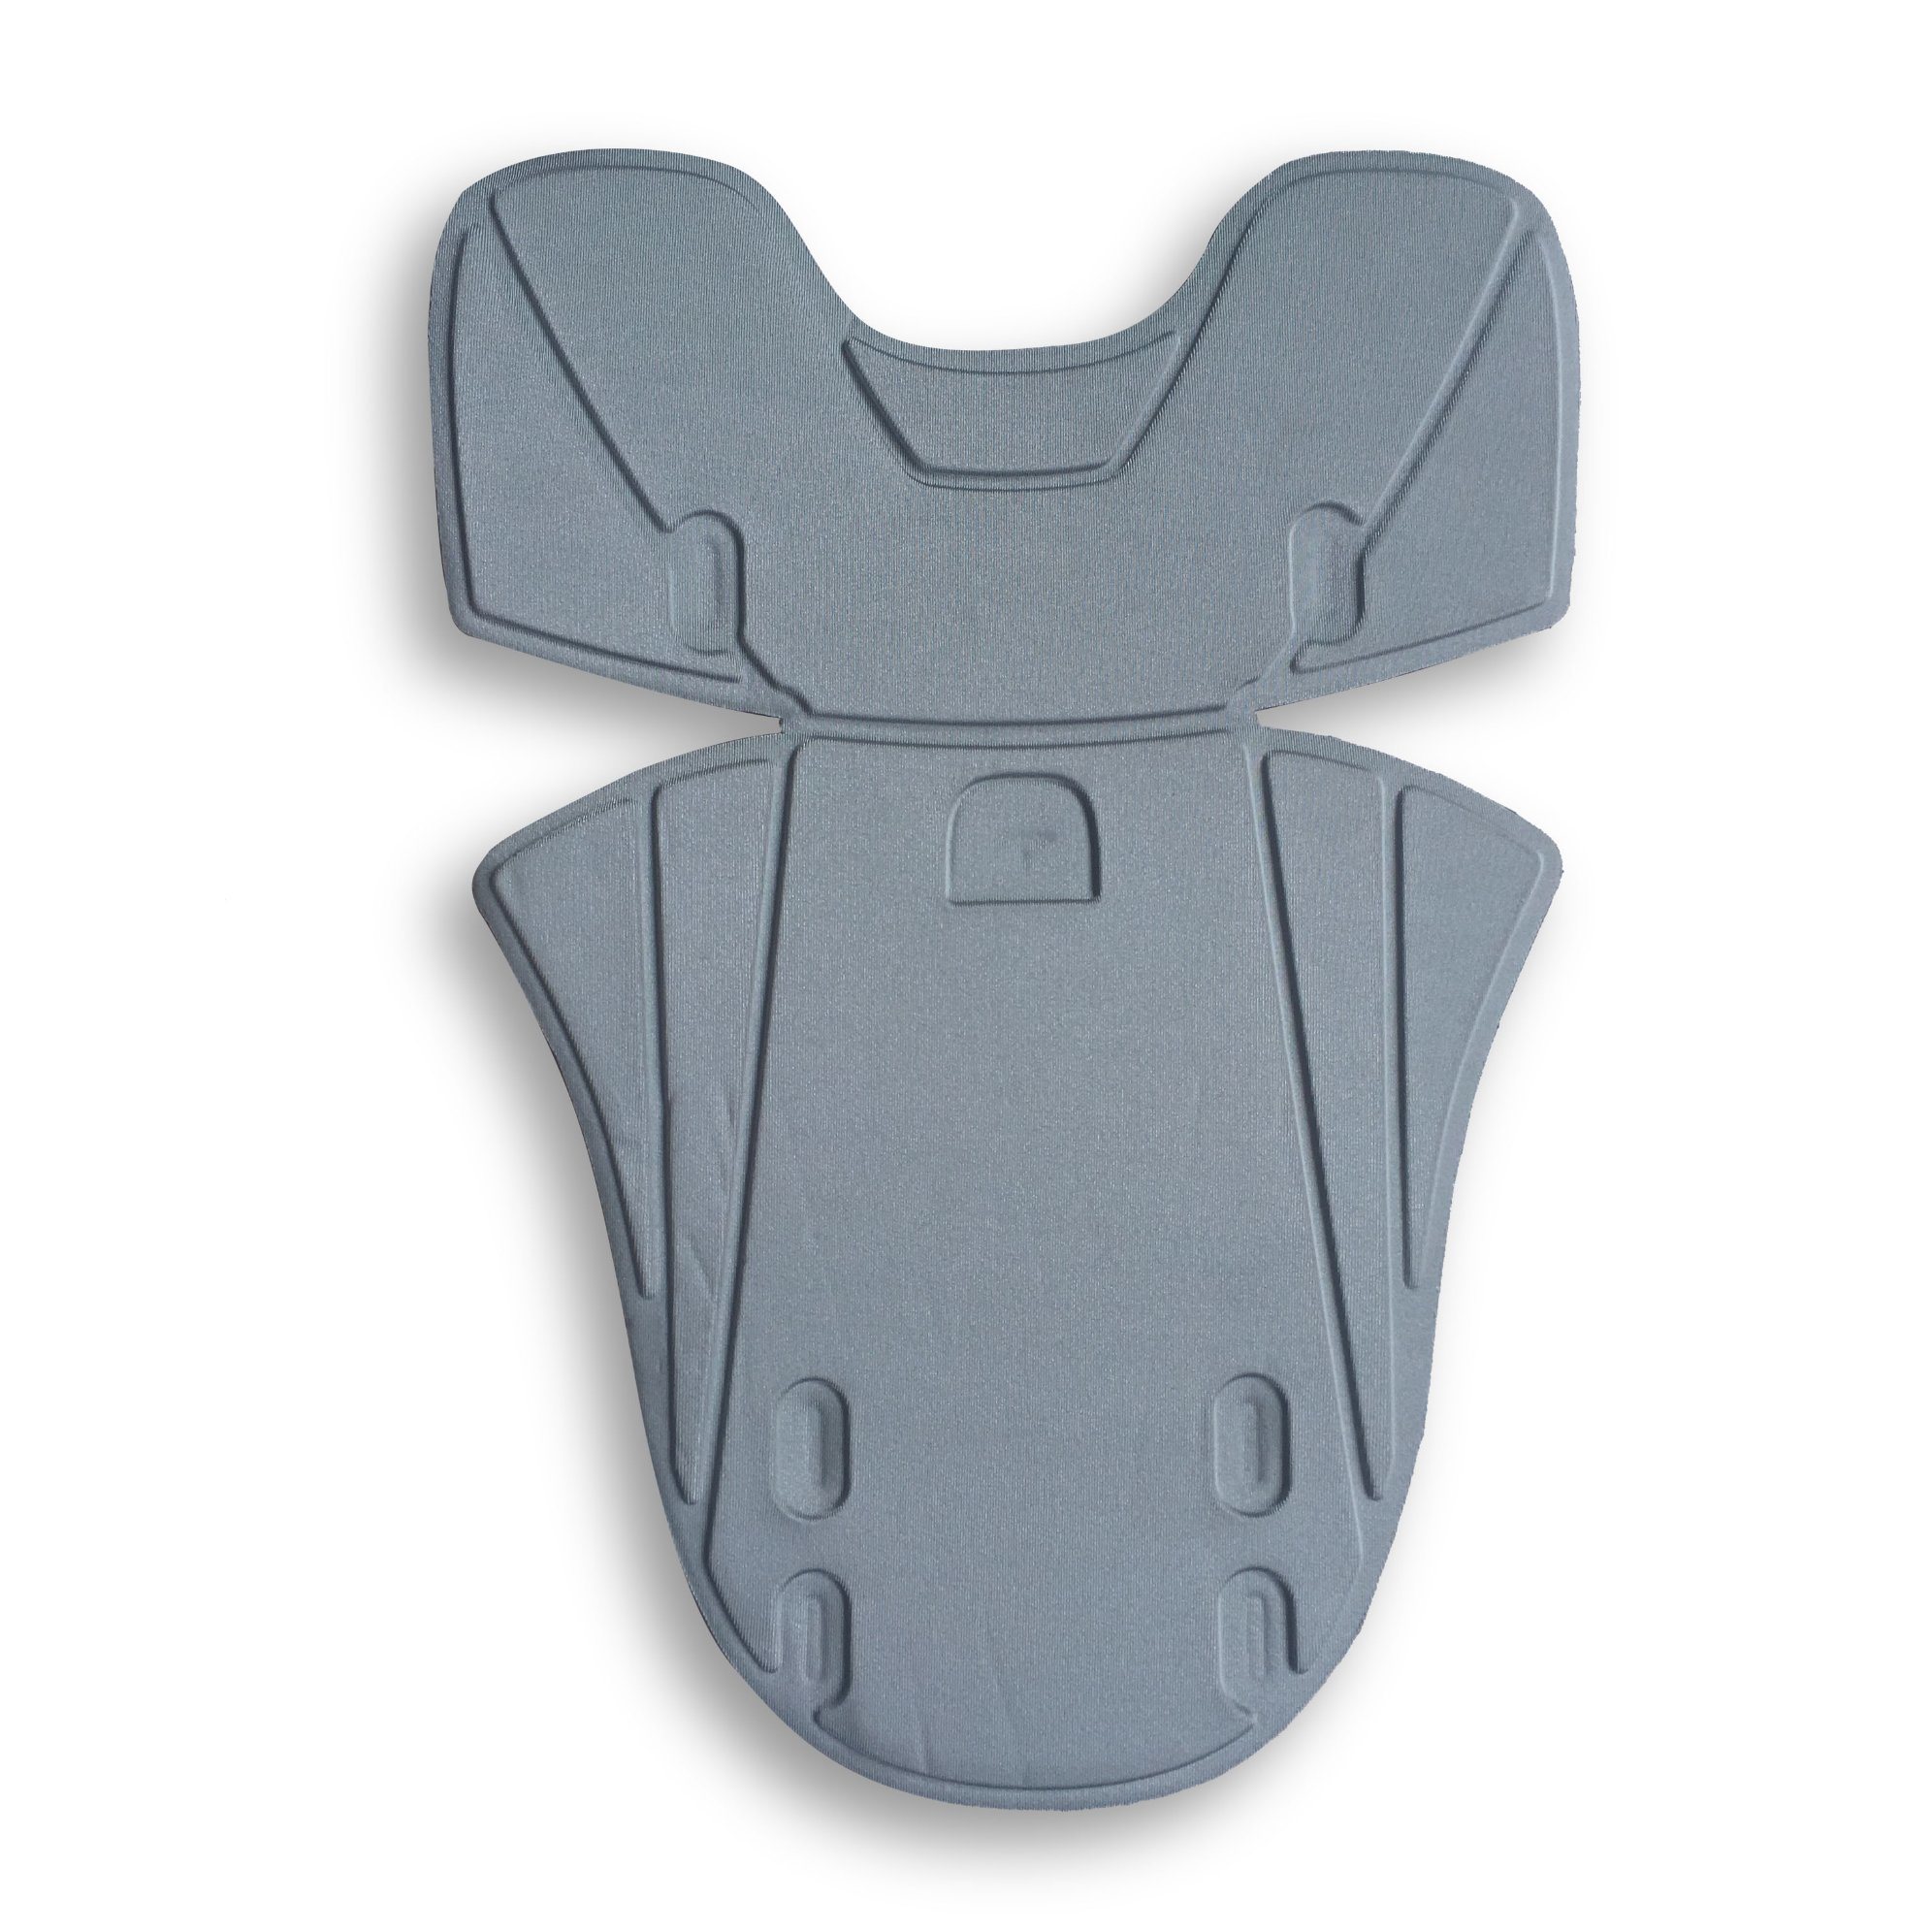 Custom Size EVA Foam Sheet Protective Knee and Elbow Pad Set